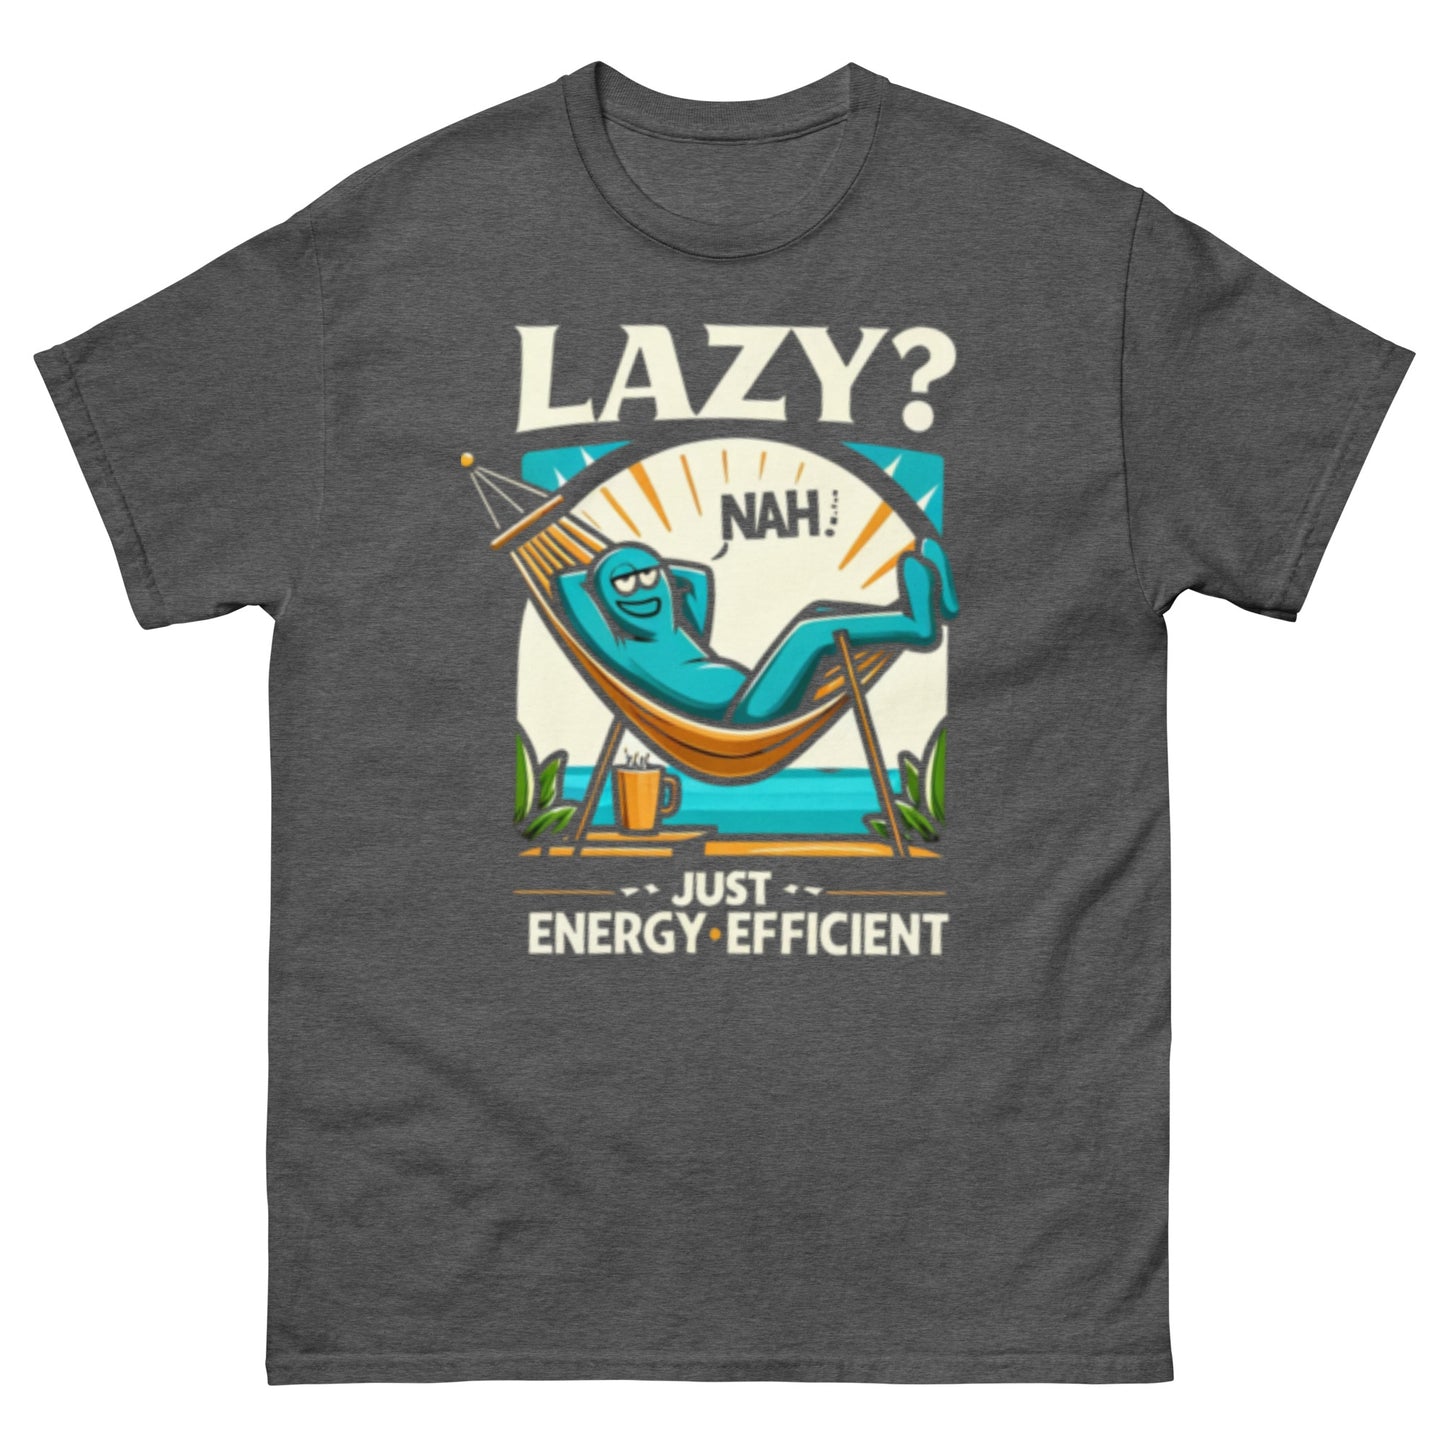 Lazy? Nah, just energy-efficient - Men's classic tee